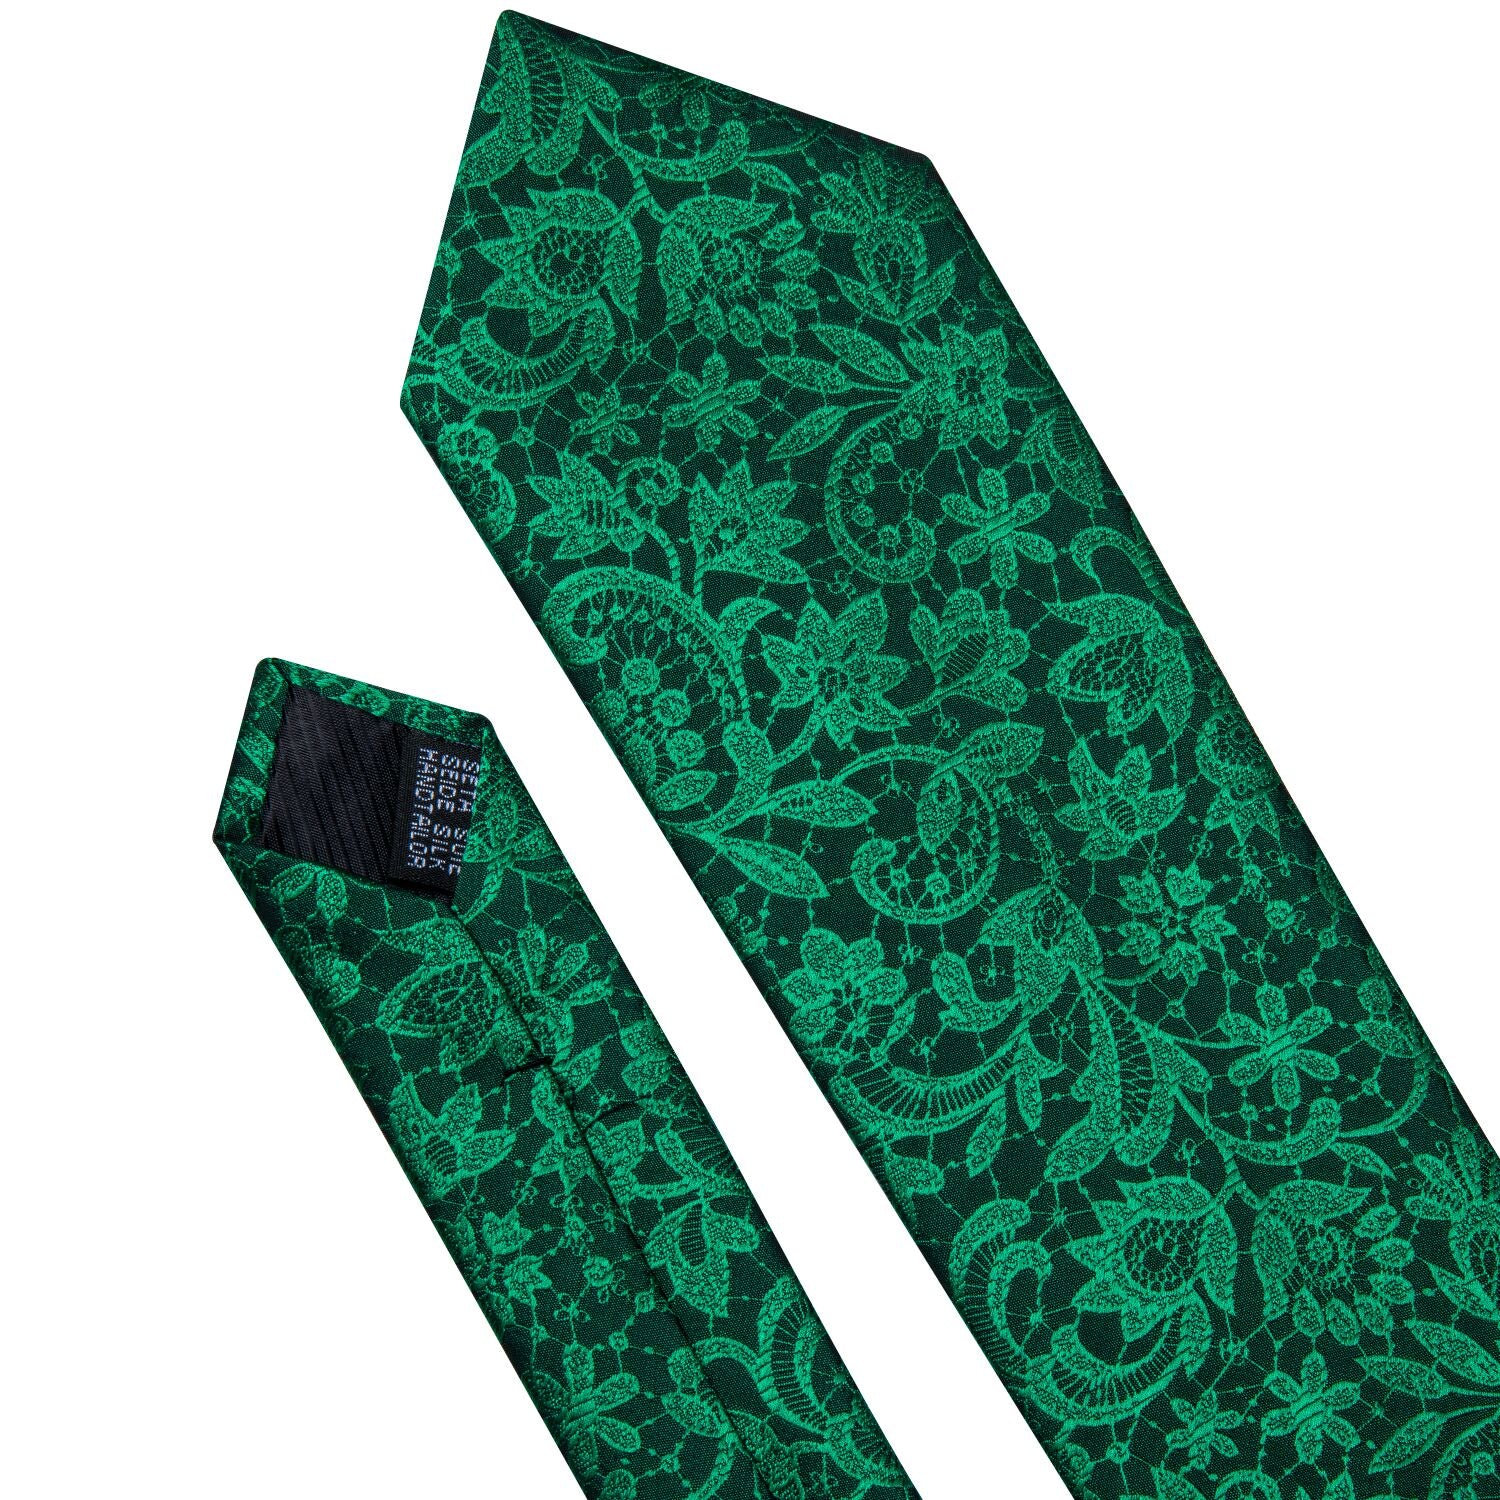 Barry.wang Floral Tie Fluorescent Green Paisley Silk Tie Hanky Cufflinks Set